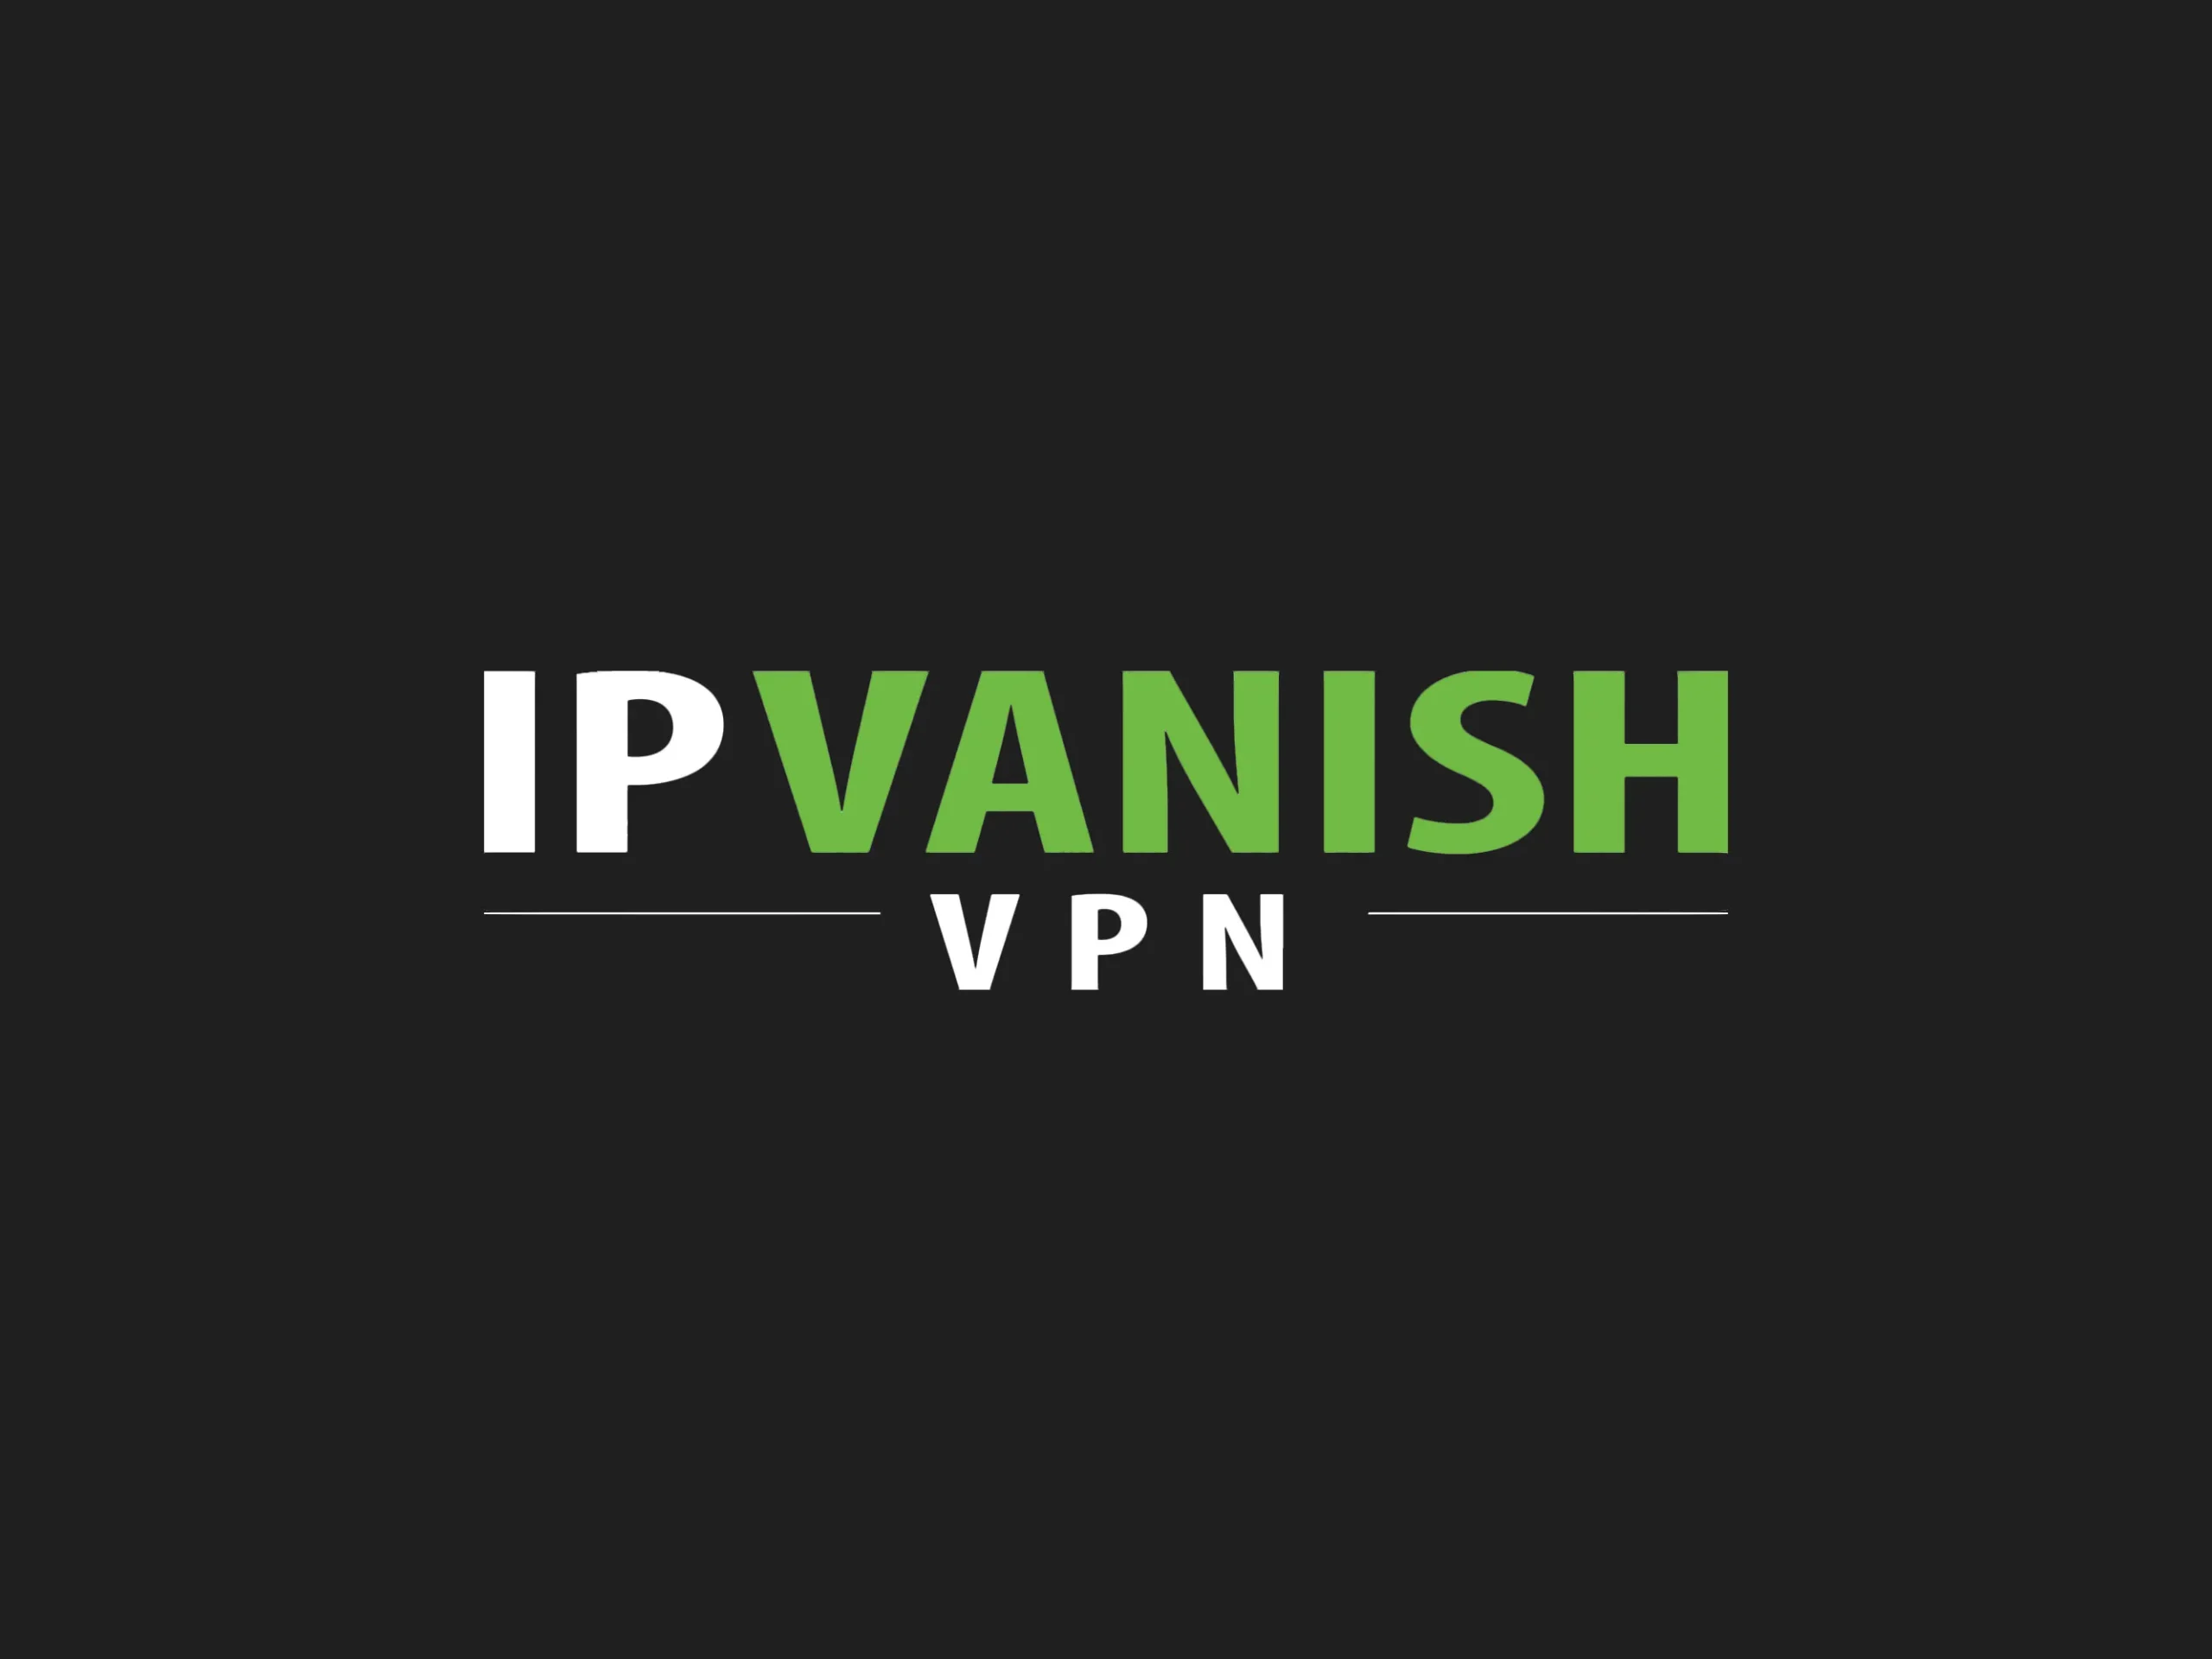 IPVanish Full Crack